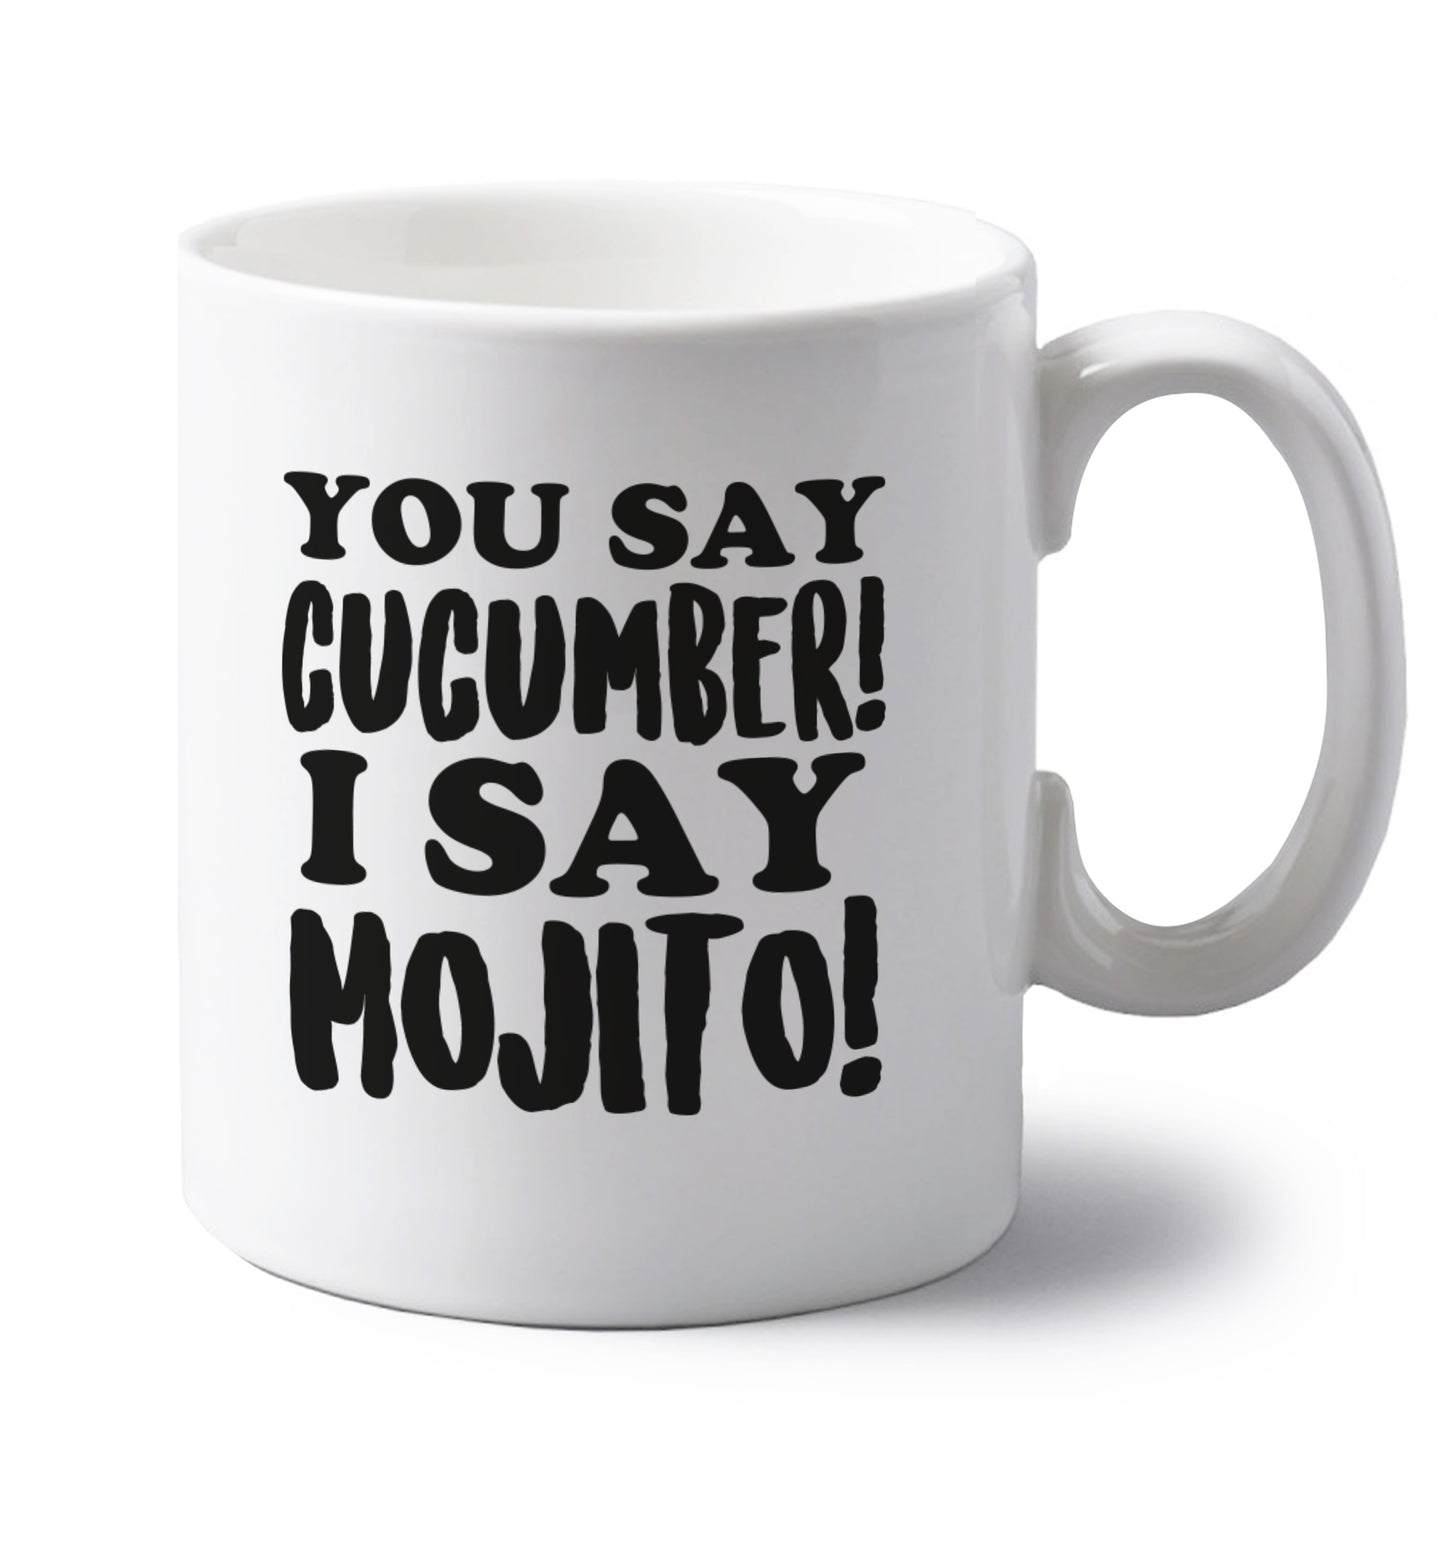 You say cucumber I say mojito! left handed white ceramic mug 